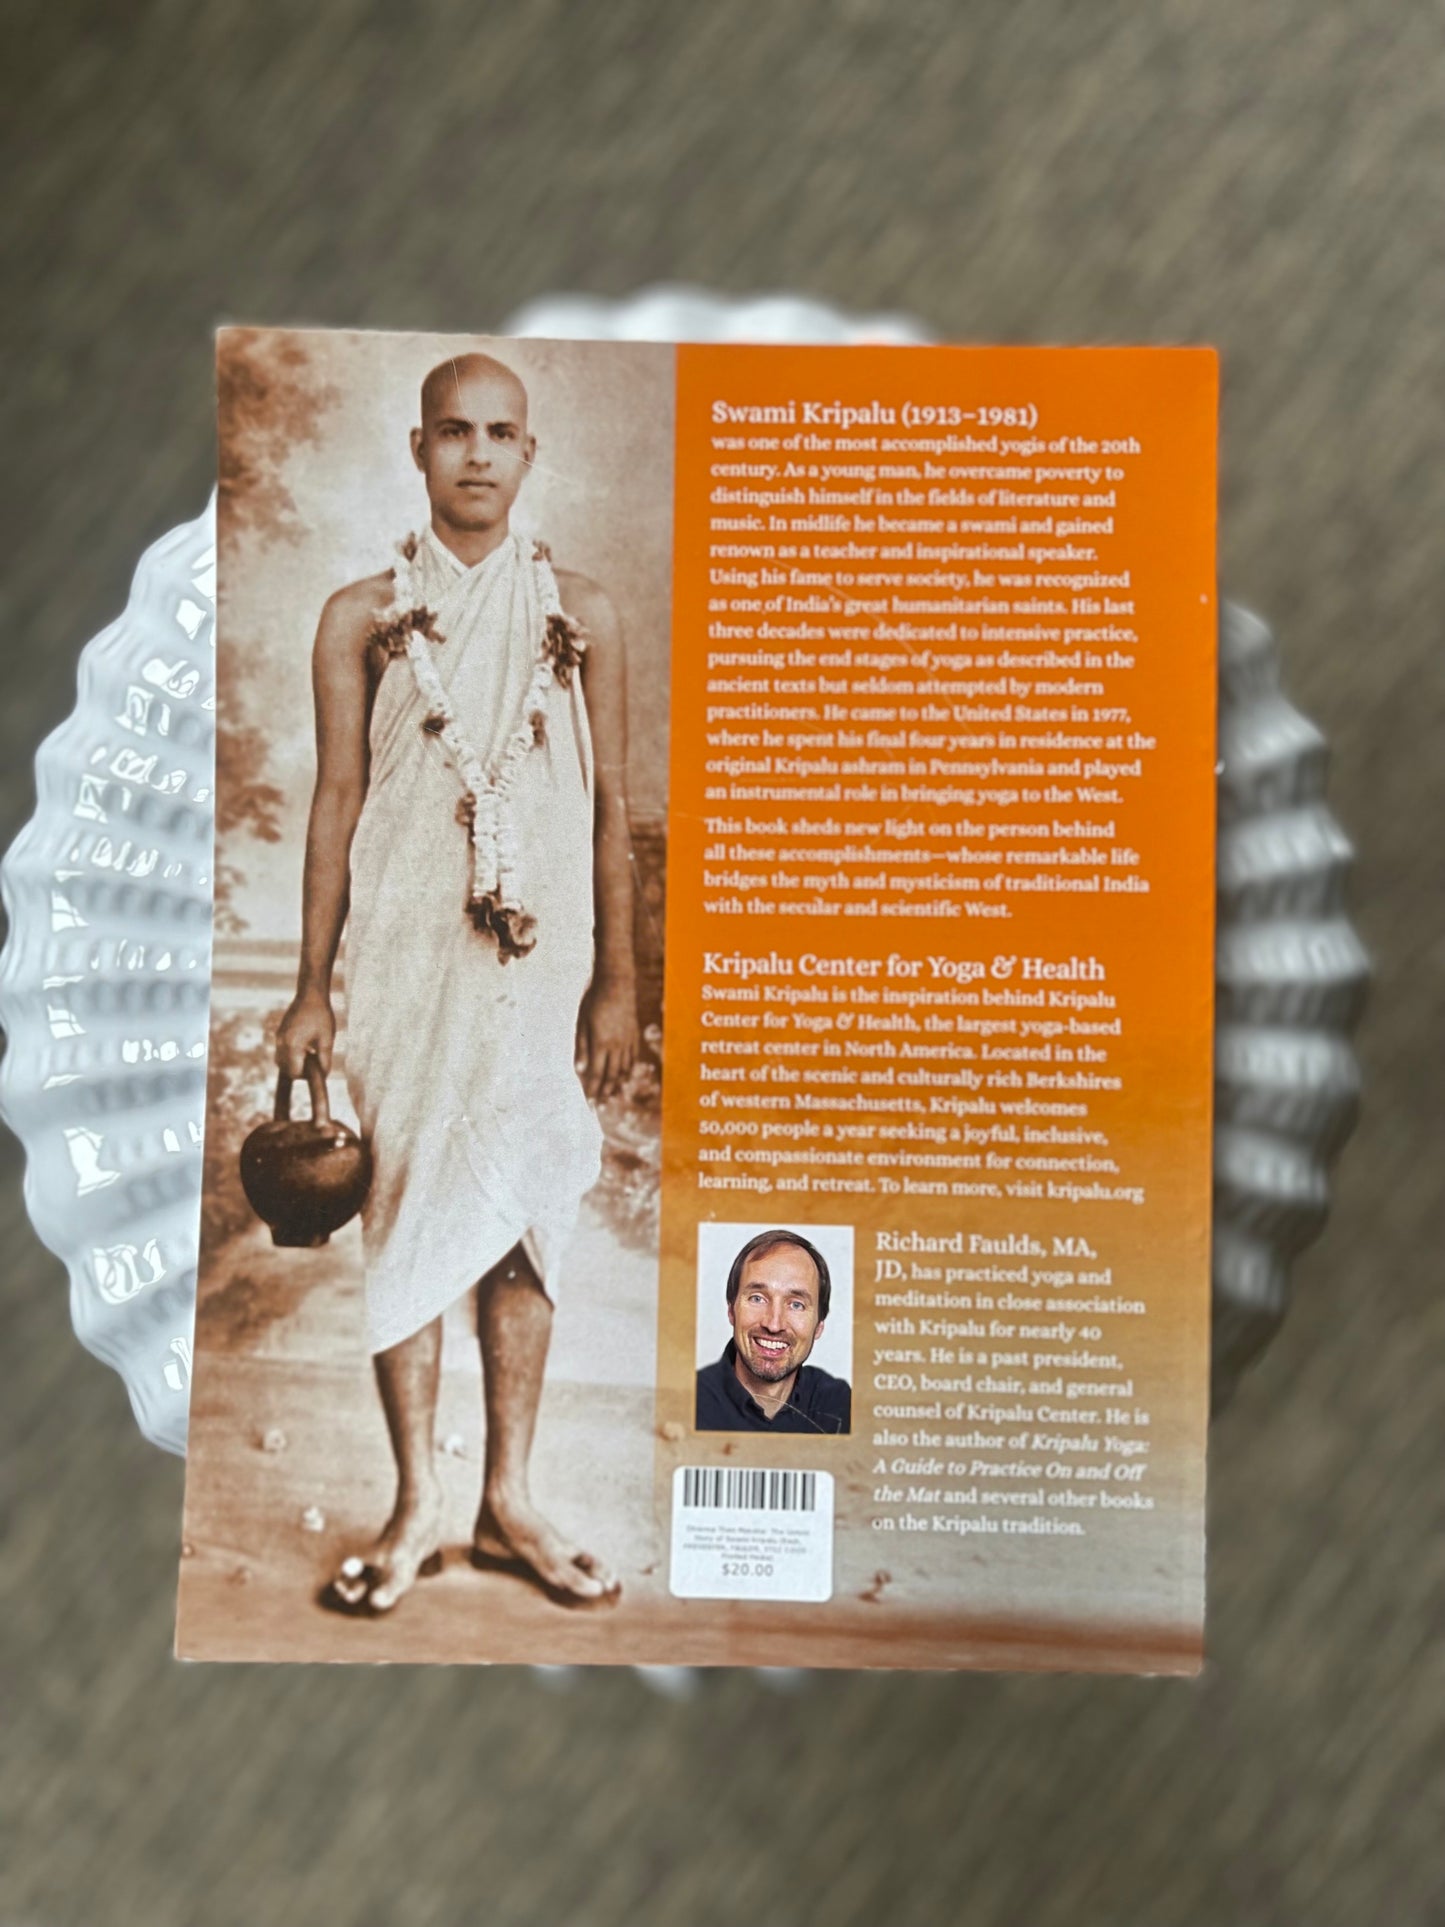 Dharma Then Moksha: The Untold Story of Swami Kripalu